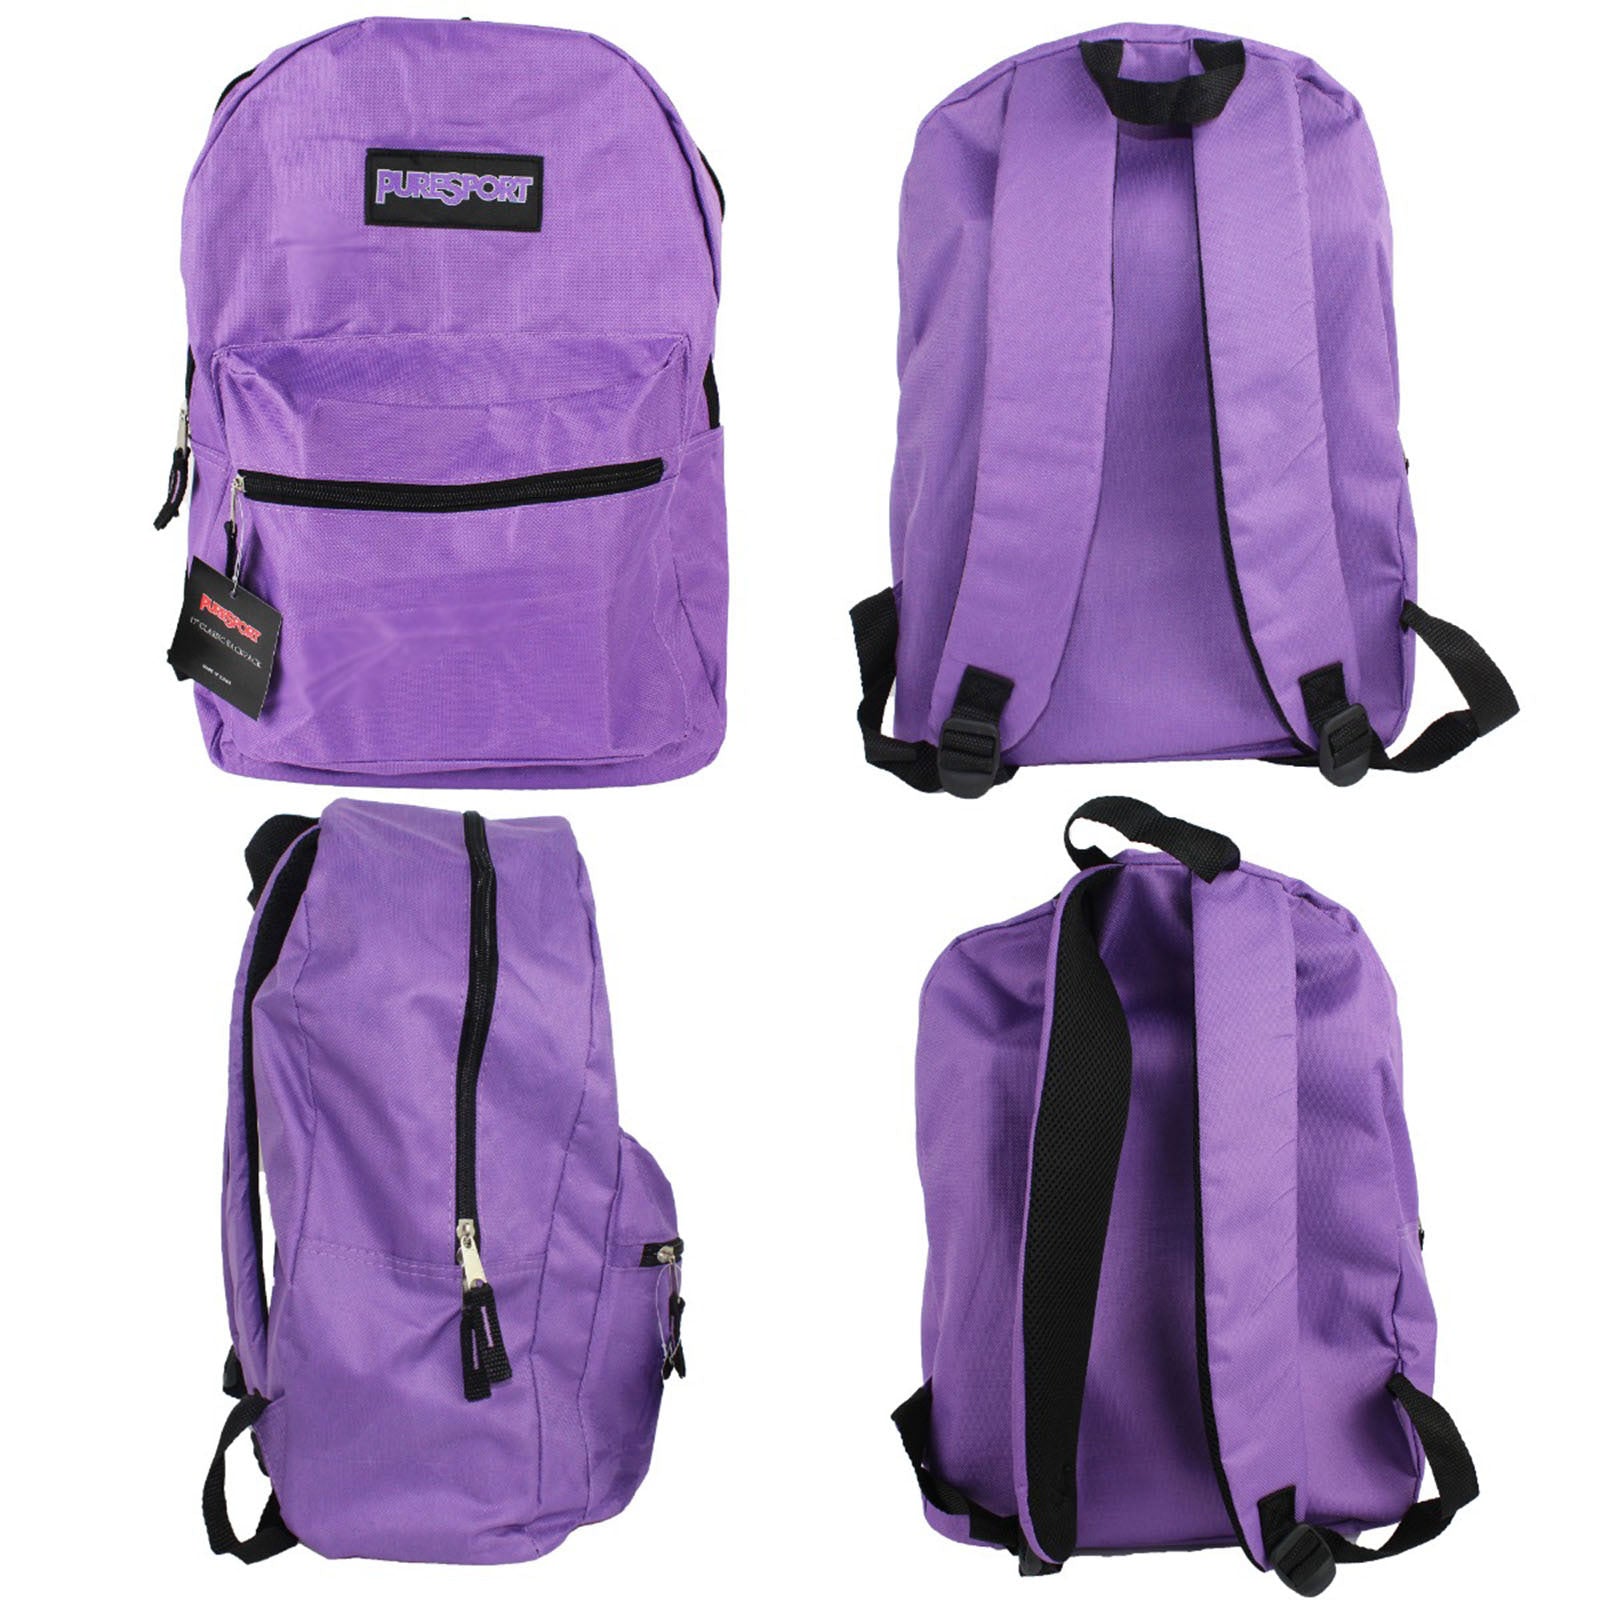 bulk wholesale backpacks in purple 17 inch bookbags for back to school